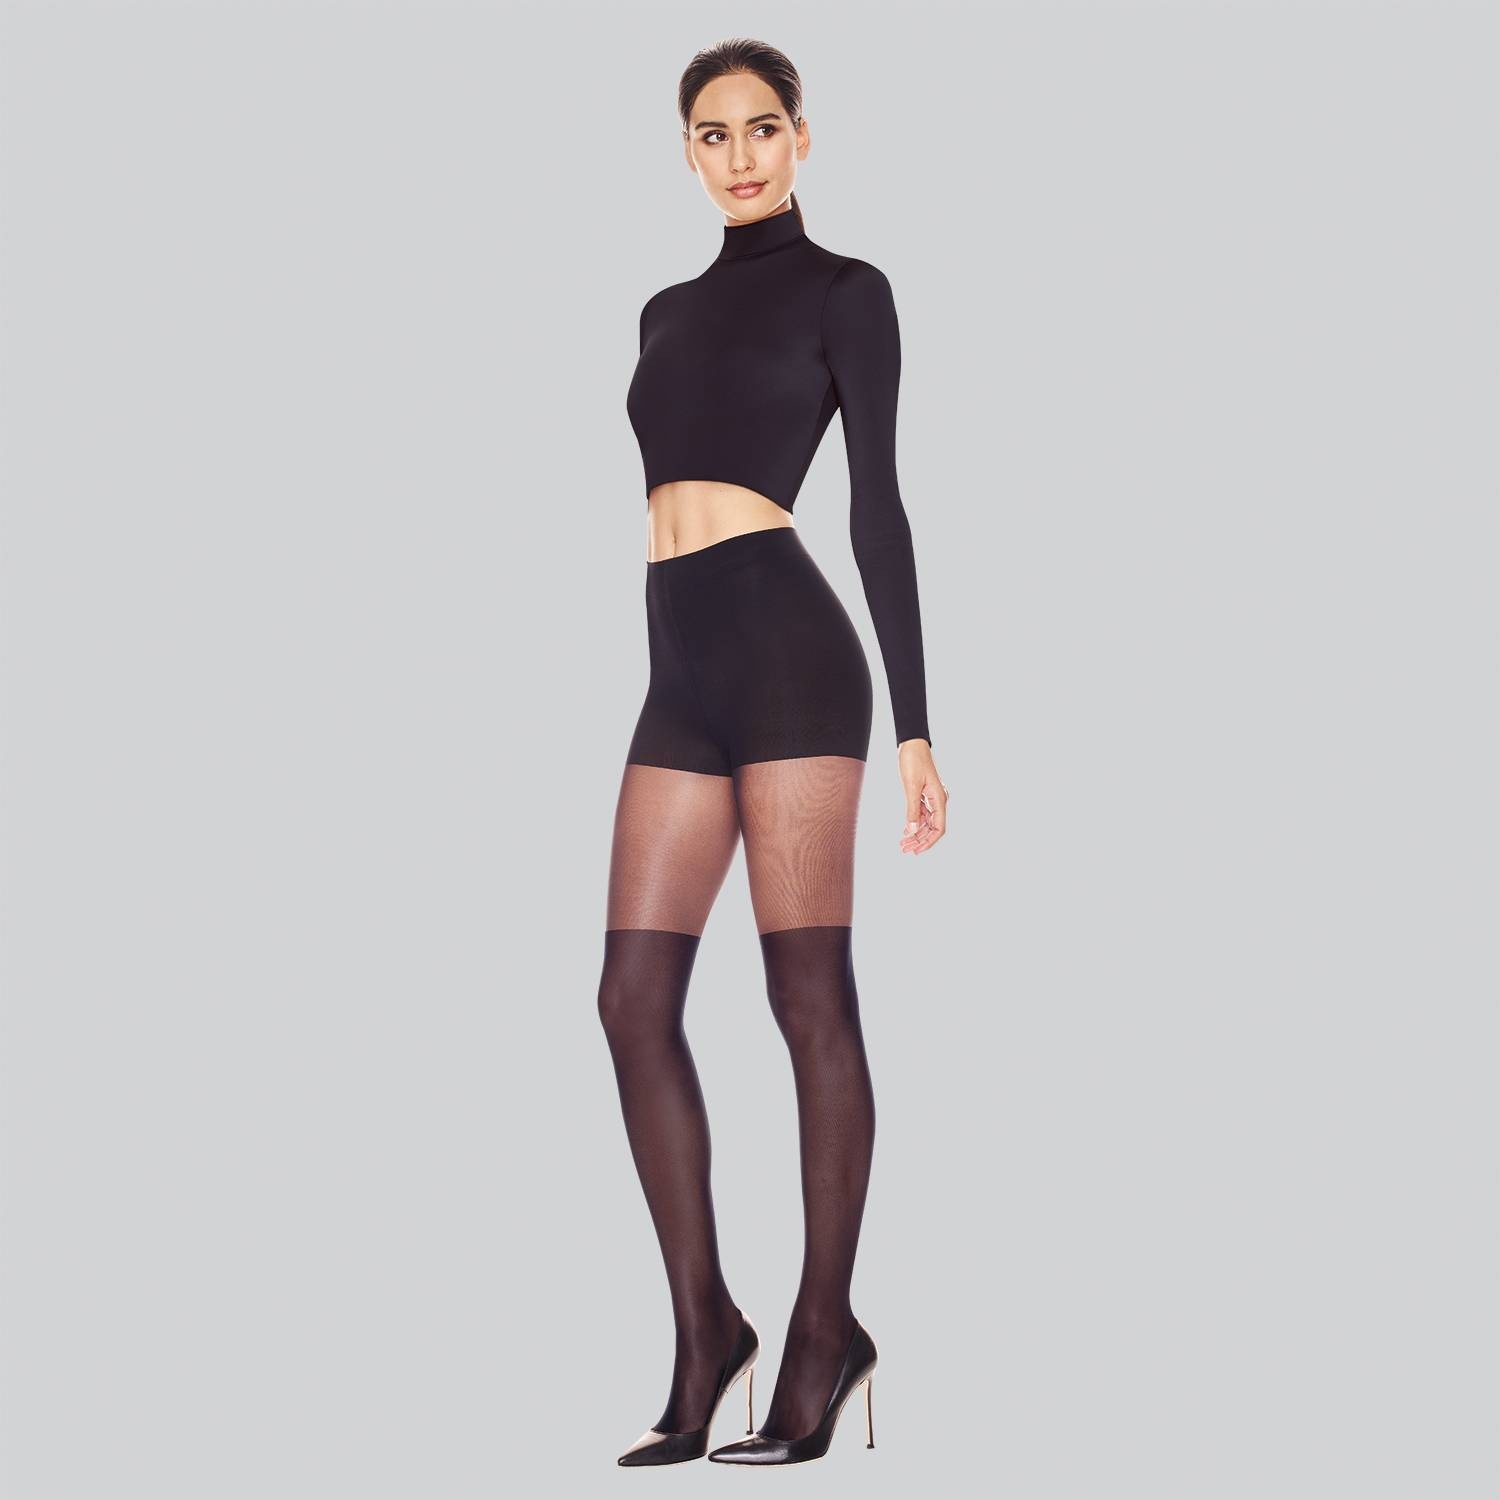 Hanes Premium Women's Perfect Illusion Thigh High Tights - Black 2X-Large 1  ct